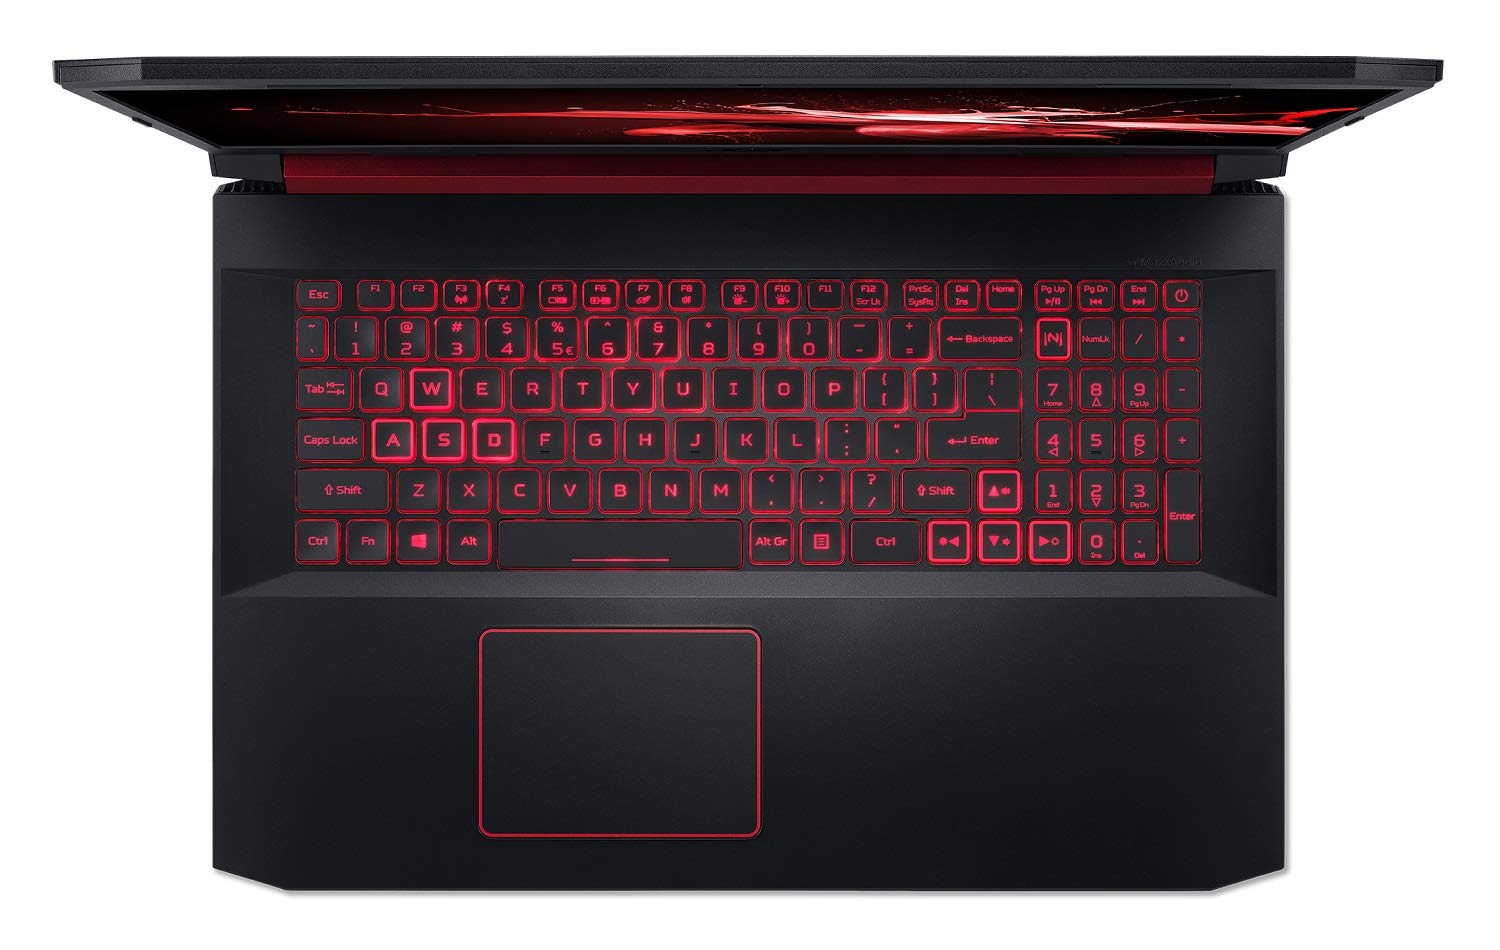 Acer Nitro 5 Gaming Laptop, 9th Gen Intel Core i7-9750H, NVIDIA GeForce RTX 2060, 17.3